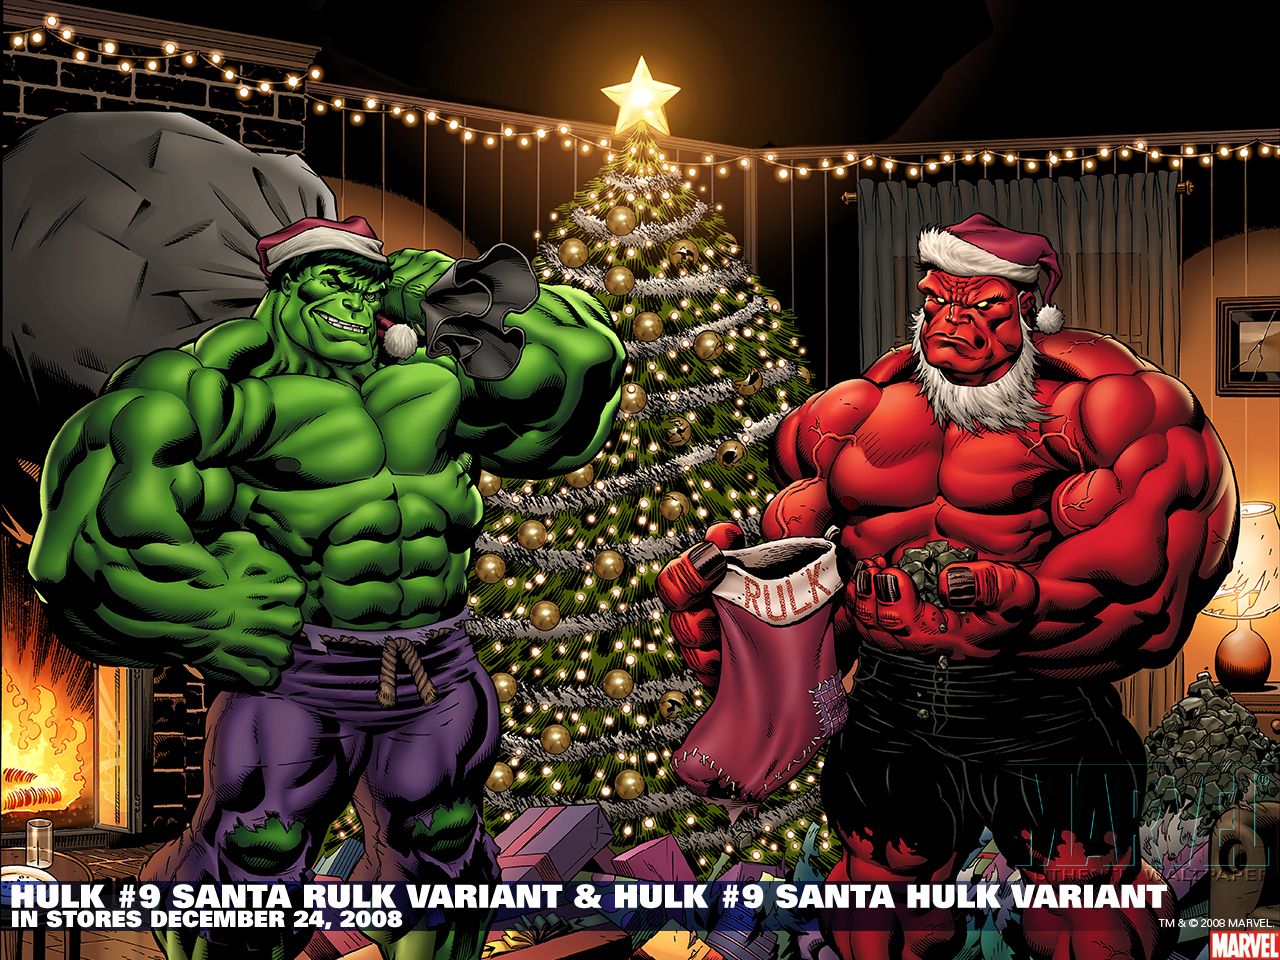 Hulk - The Incredible Hulk Wallpaper (14044438) - Fanpop